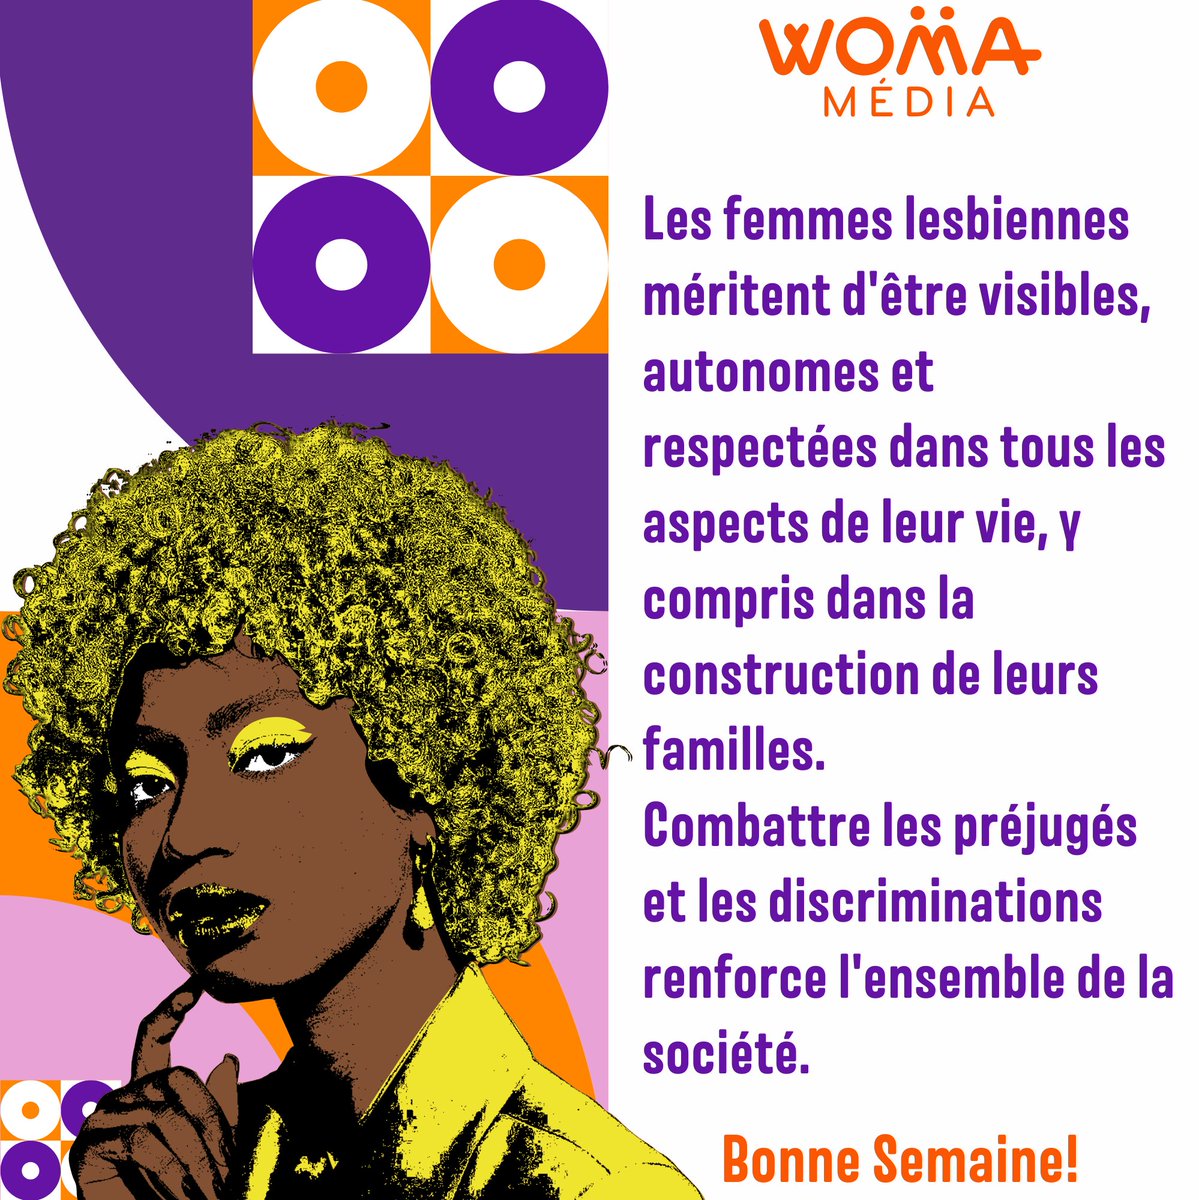 #womamedia
#lbtq
#moisdavril
#visibilitélesbienne
#nouvellesemaine